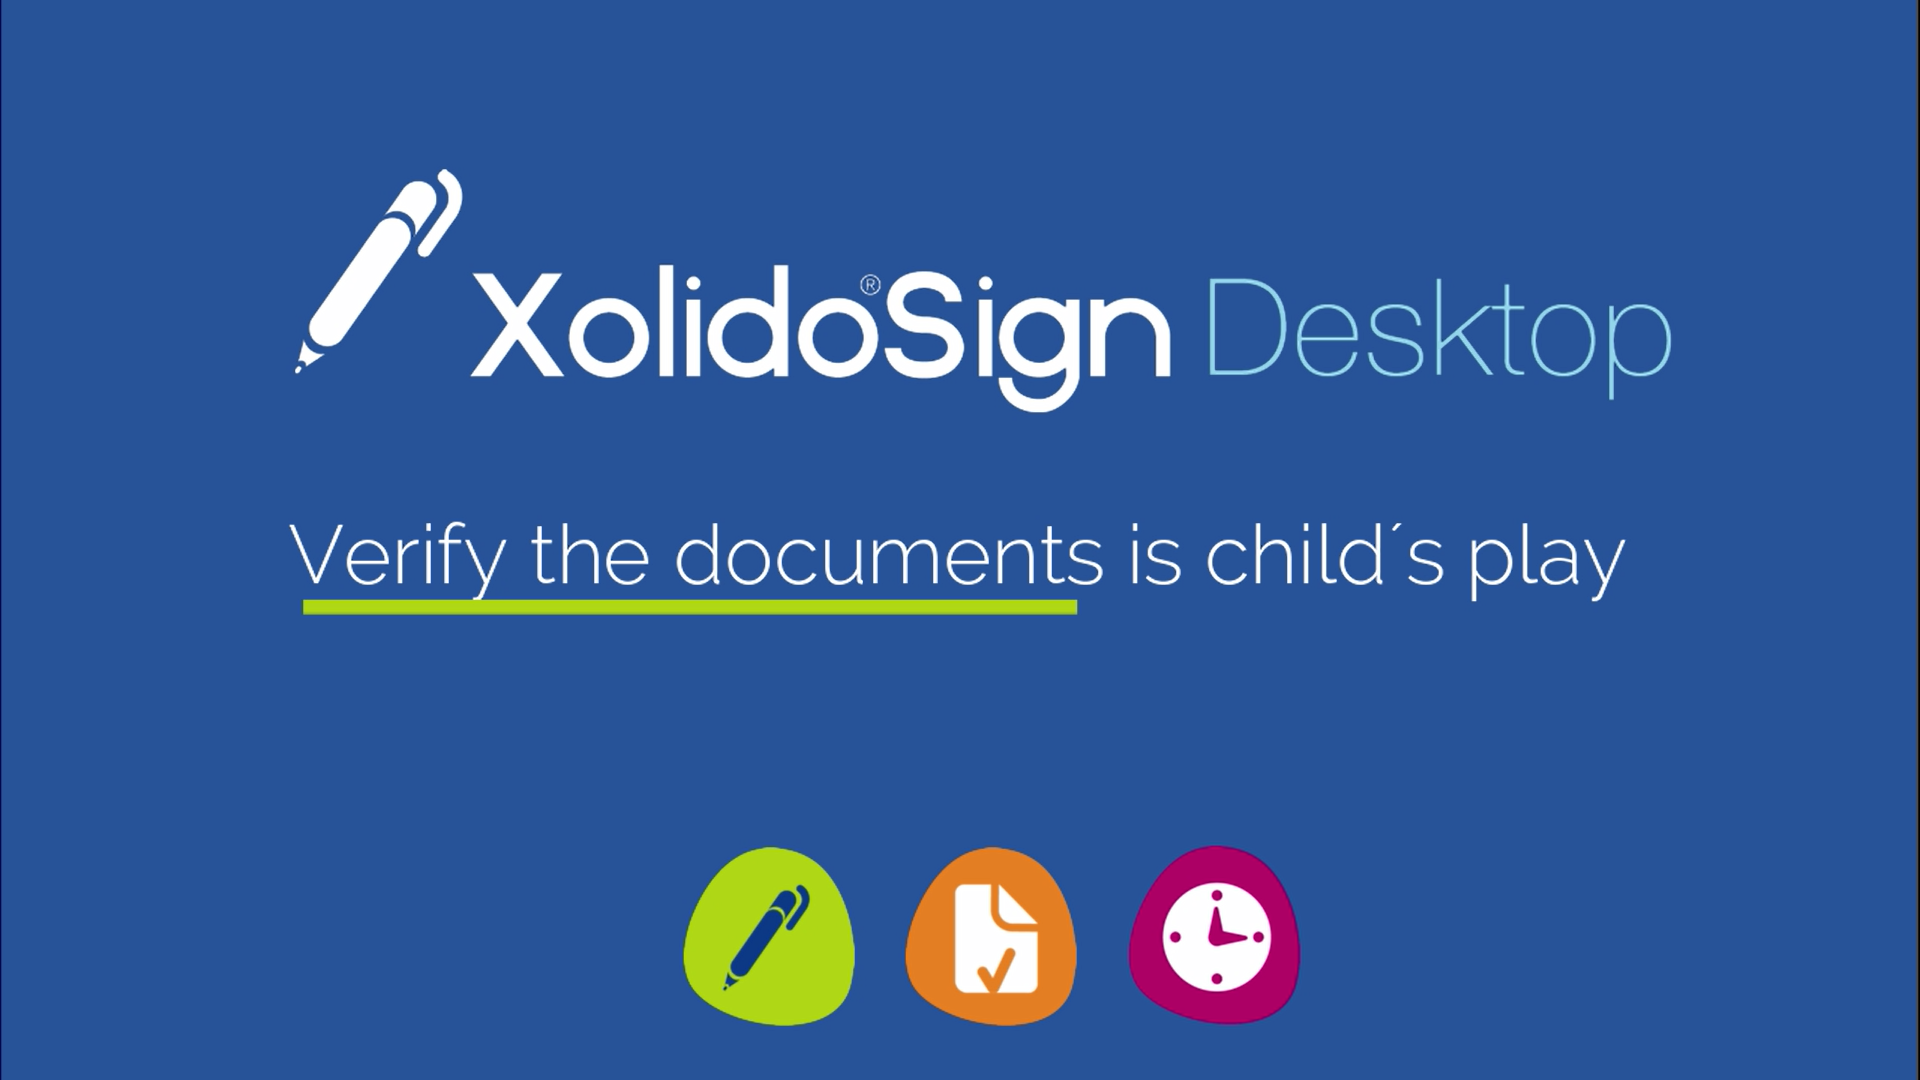 Verification of documents with XolidoSign Desktop